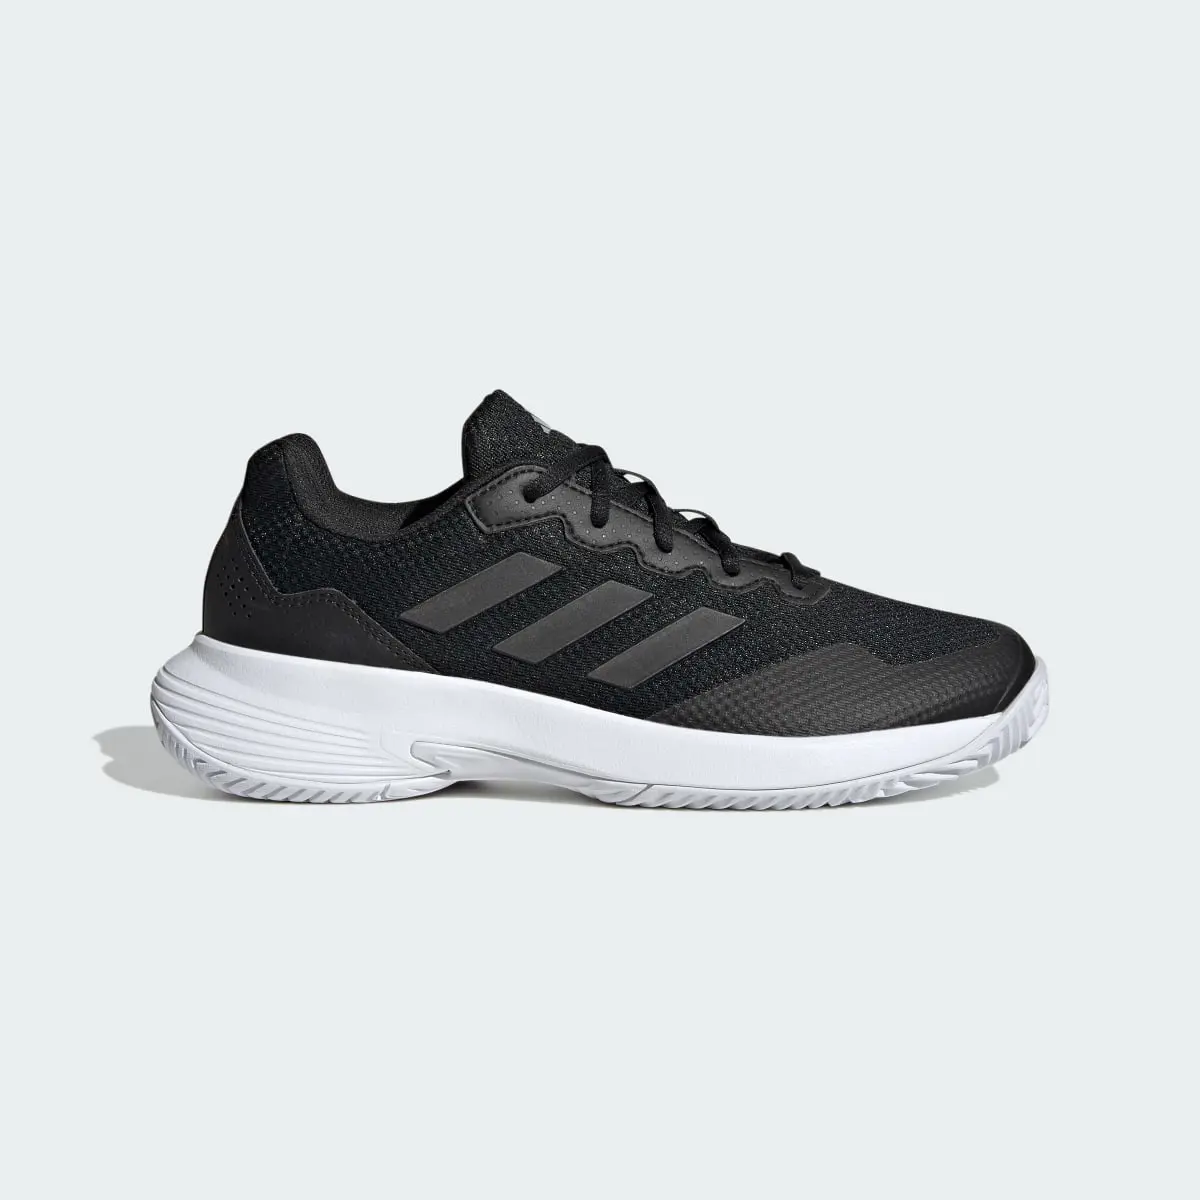 Adidas Gamecourt 2.0 Tenis Ayakkabısı. 2